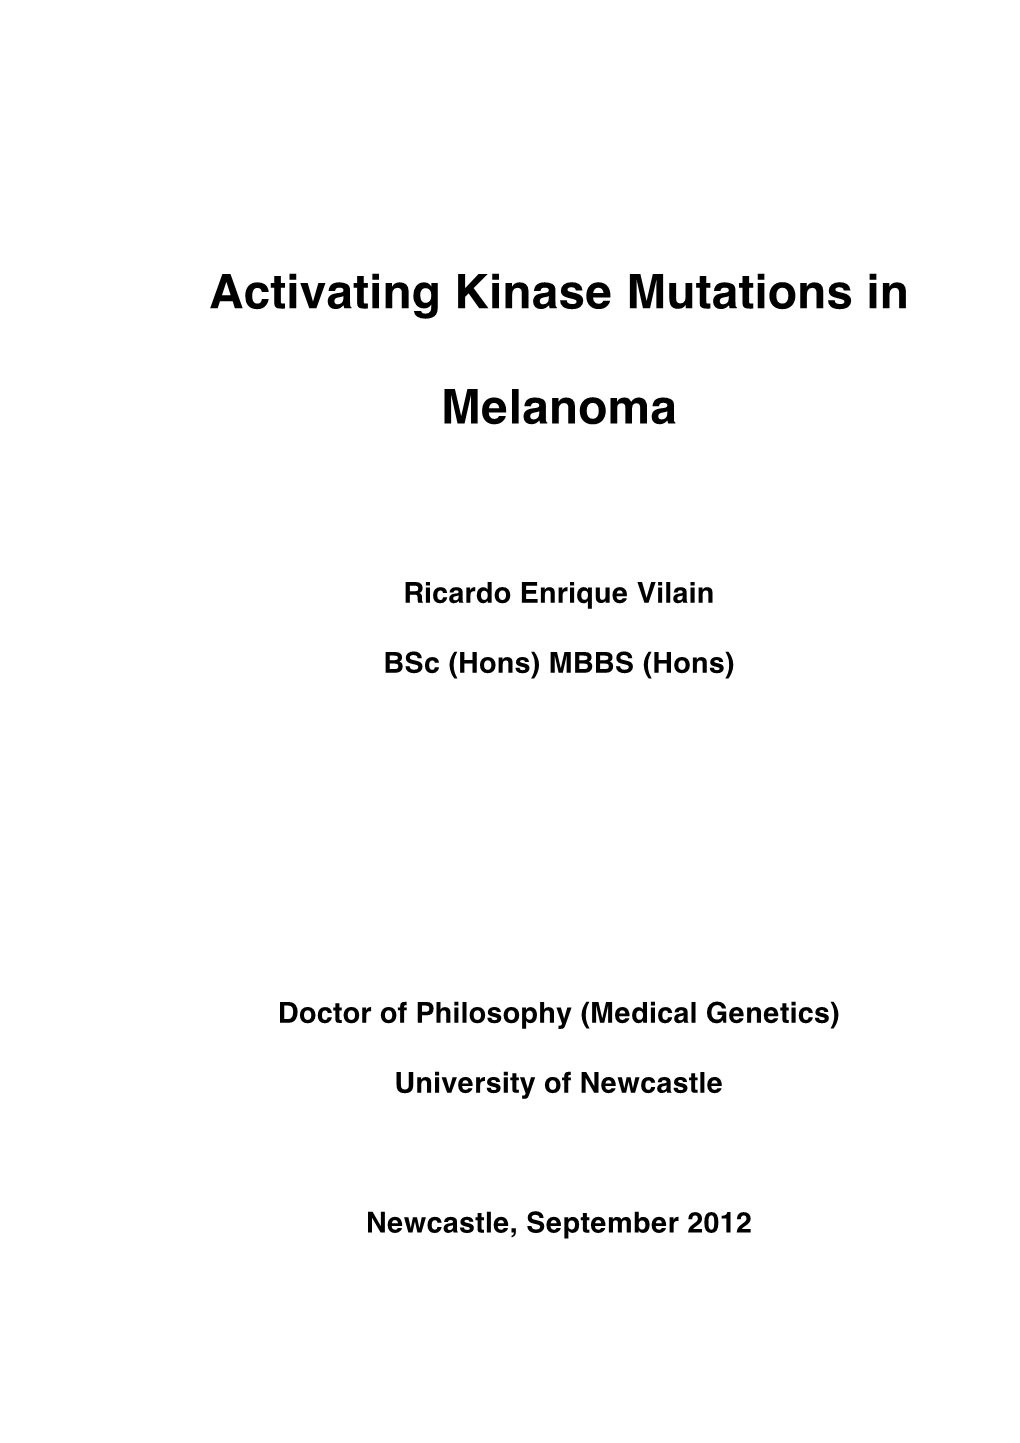 Activating Kinase Mutations in Melanoma